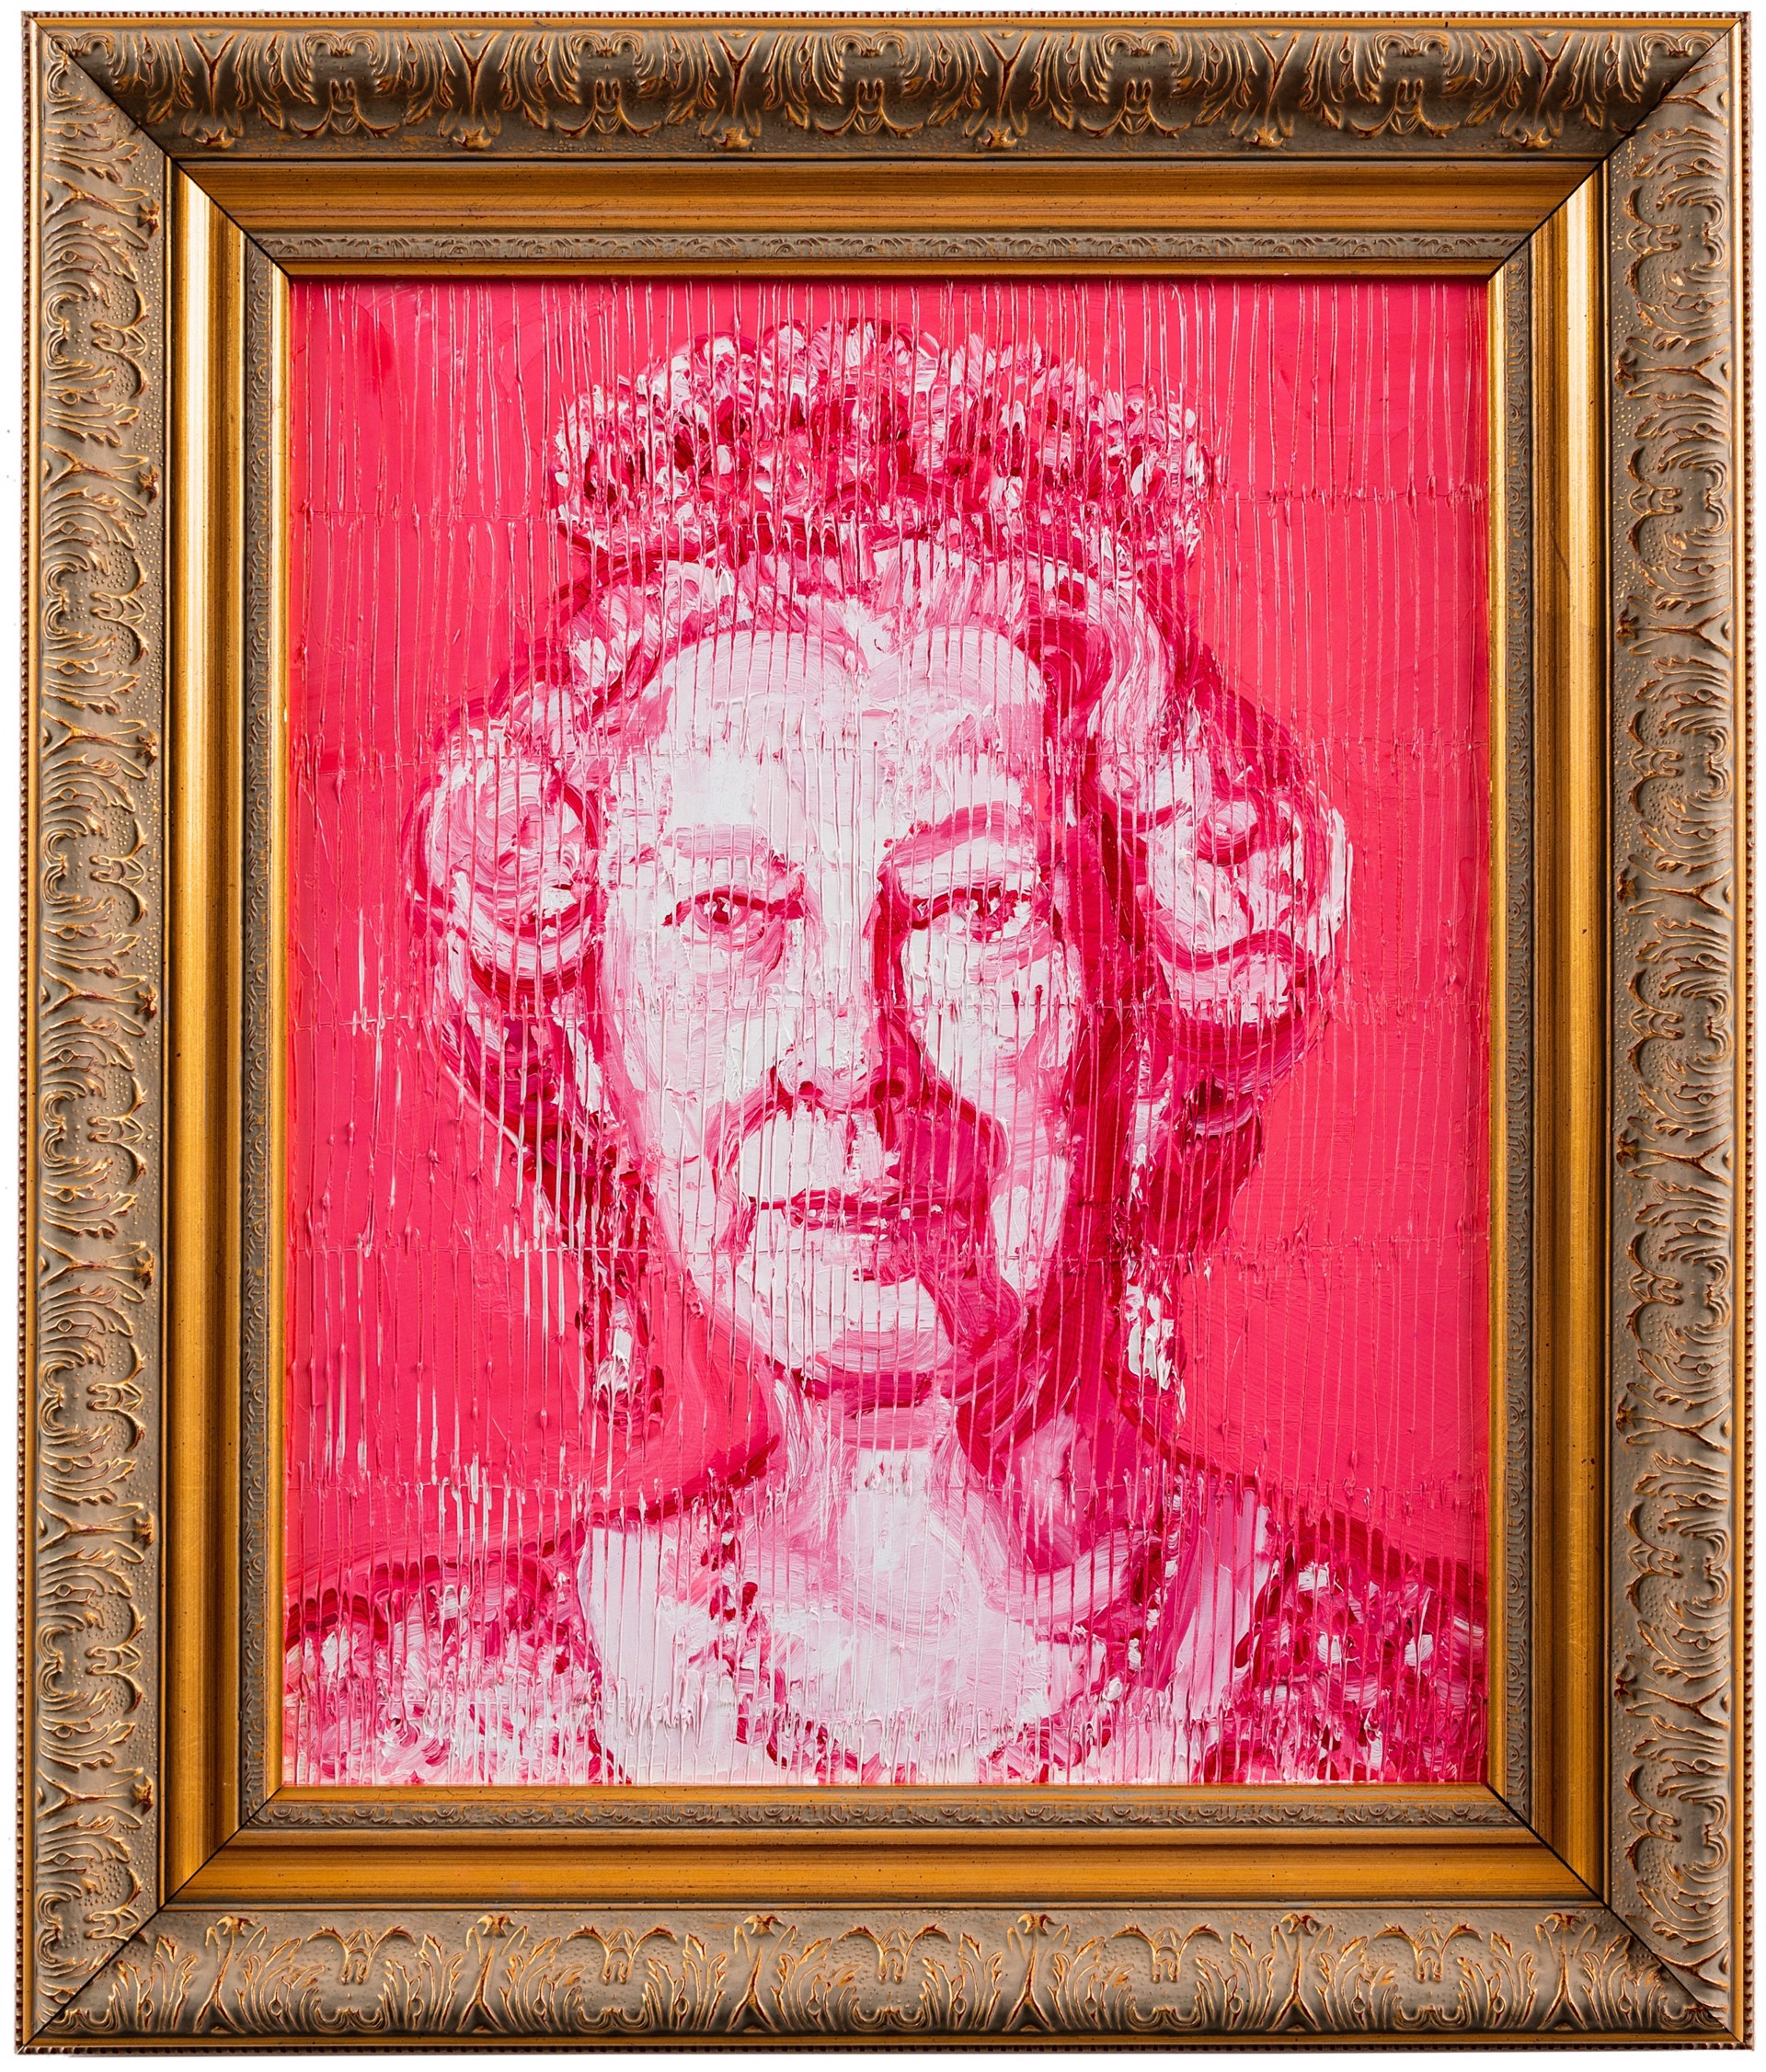 Her Majesty Queen Elizabeth by Hunt Slonem